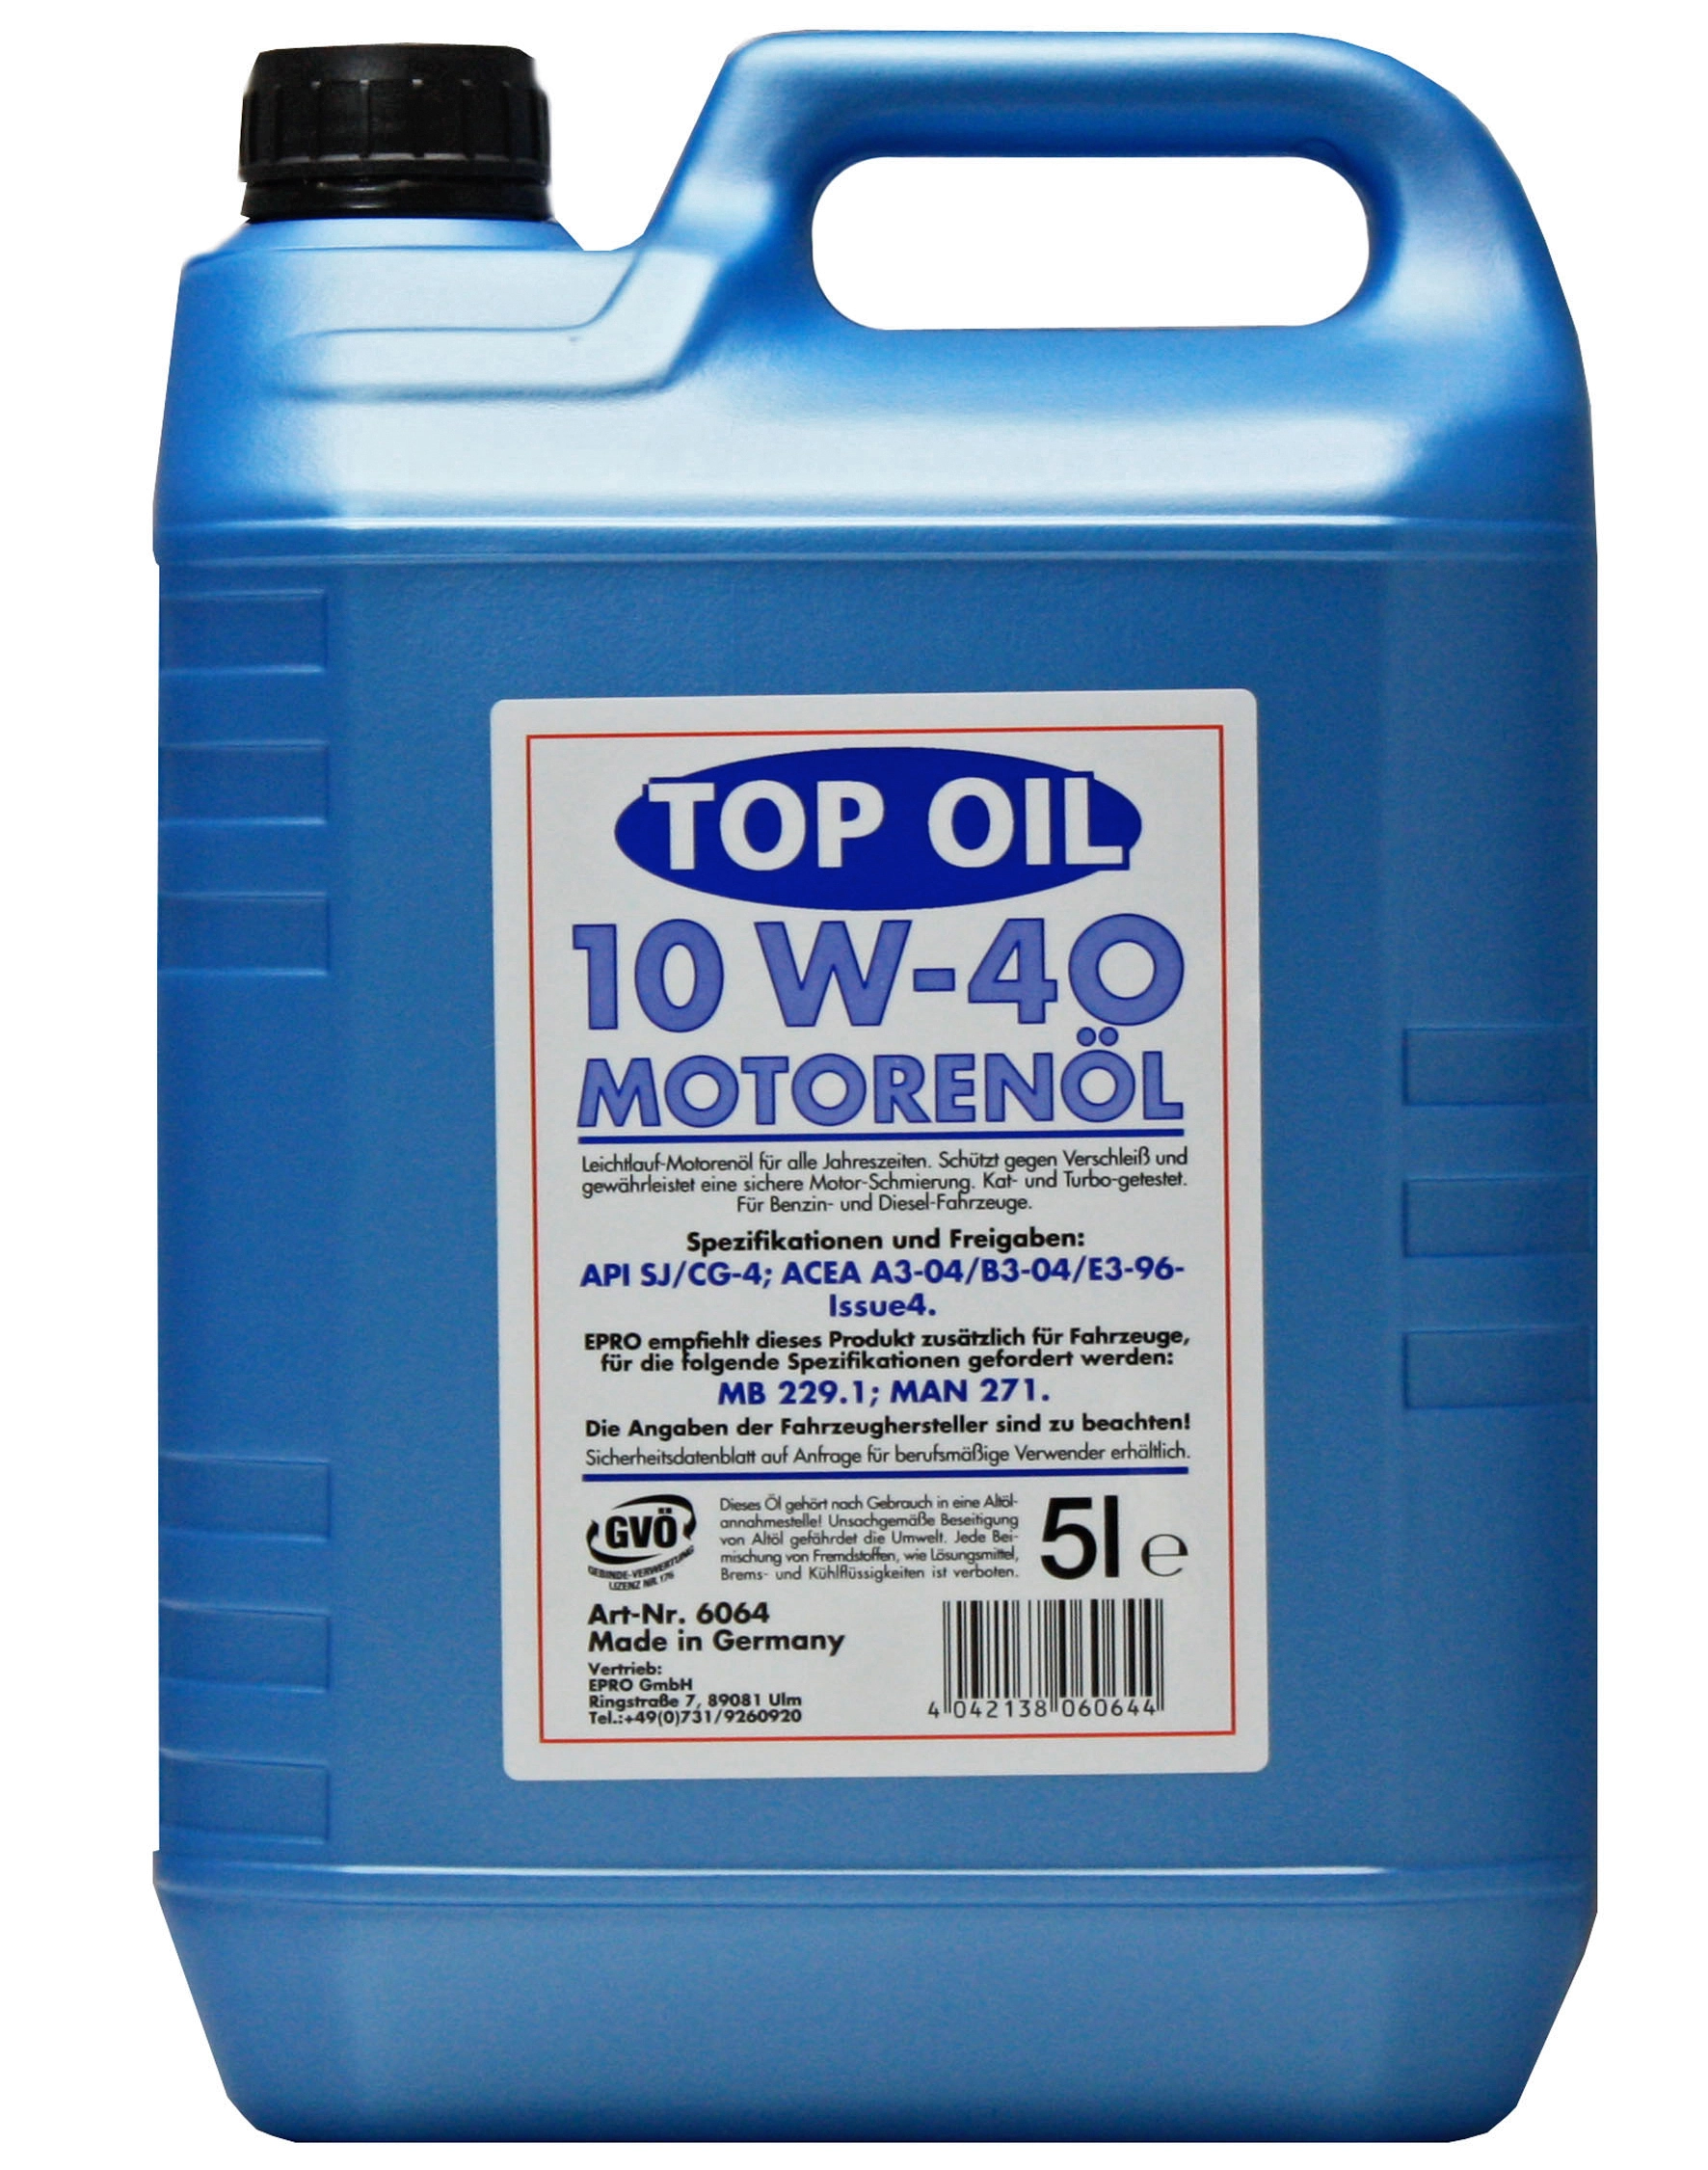 Top Oil 10W-40 5 l Motoröl kaufen bei OBI